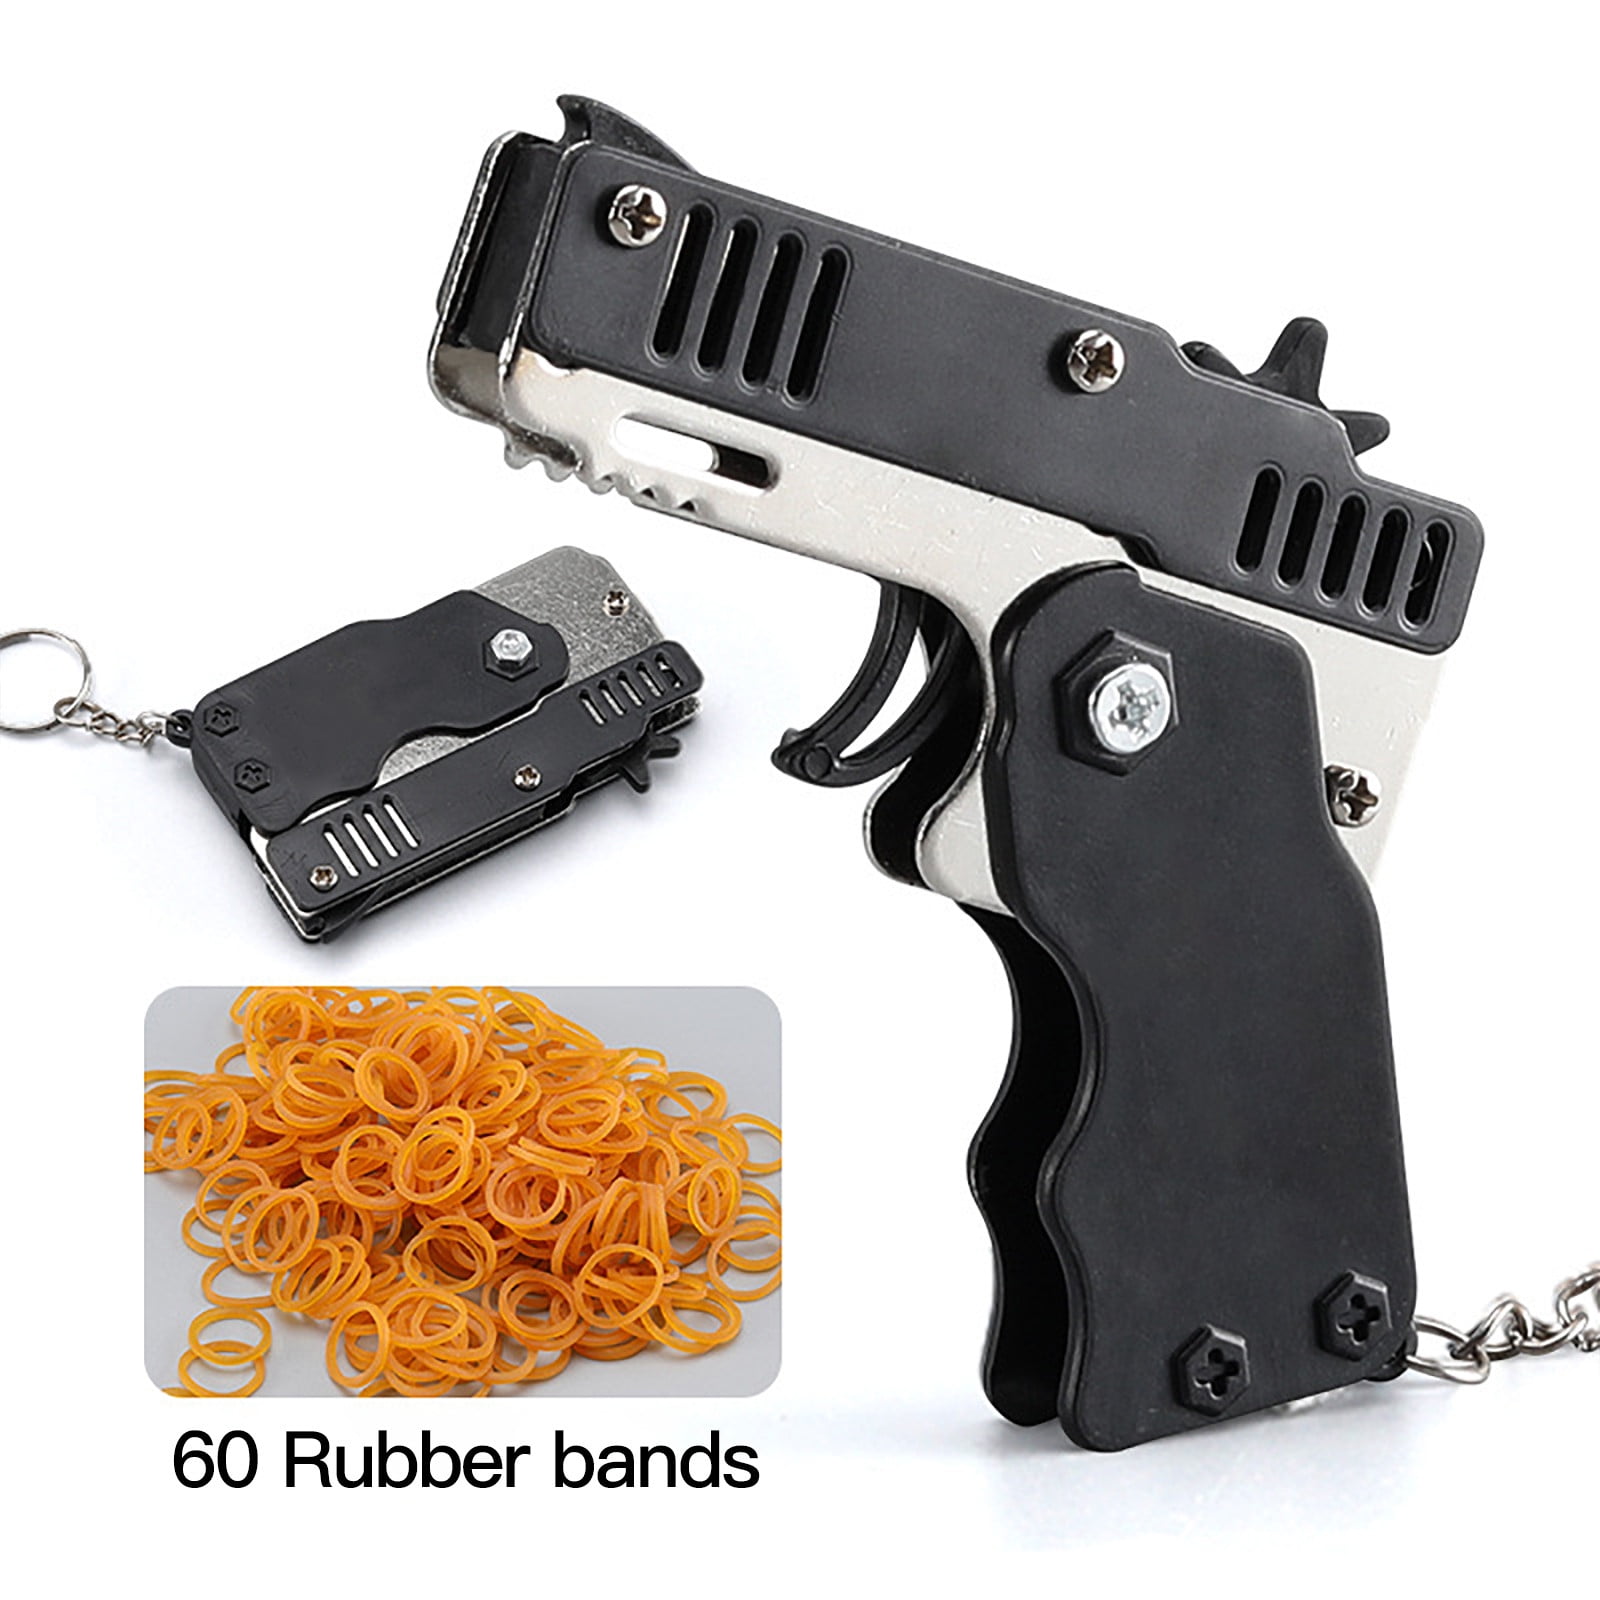 200 Rubber Band Stainless steel Rubber Band Gun Shot Folding Mini Shooting Toys 